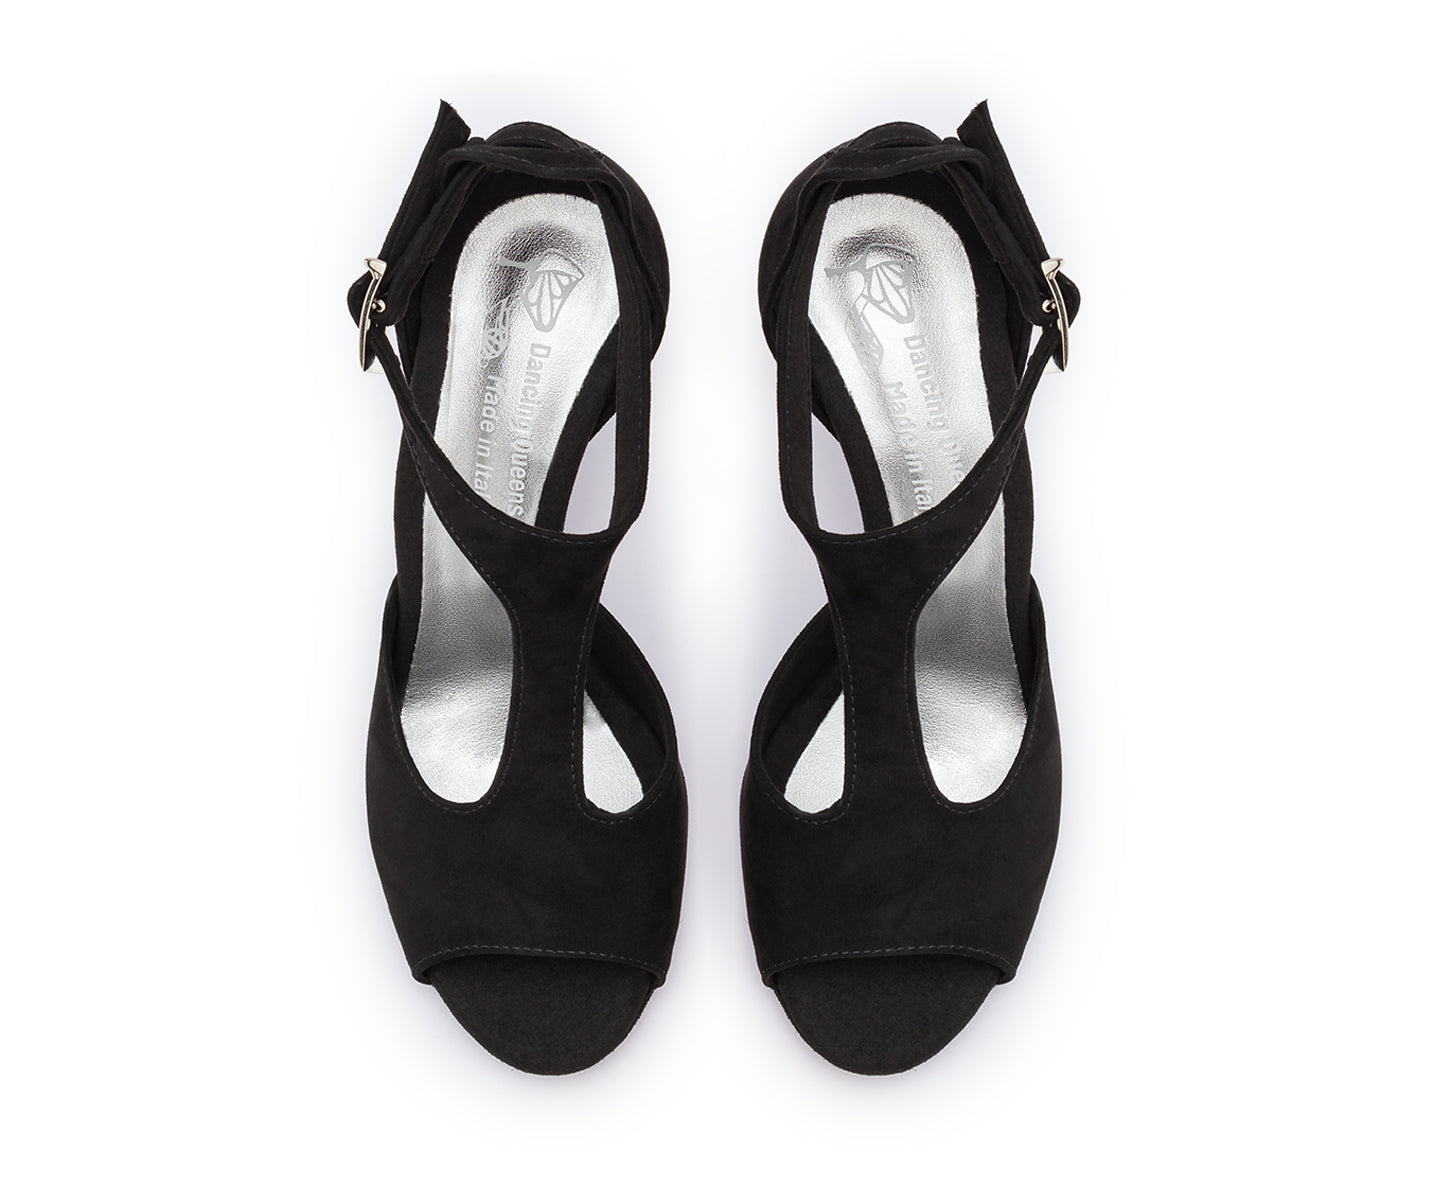 DQ1001 zapatos de baile en negro con suela de gamuza